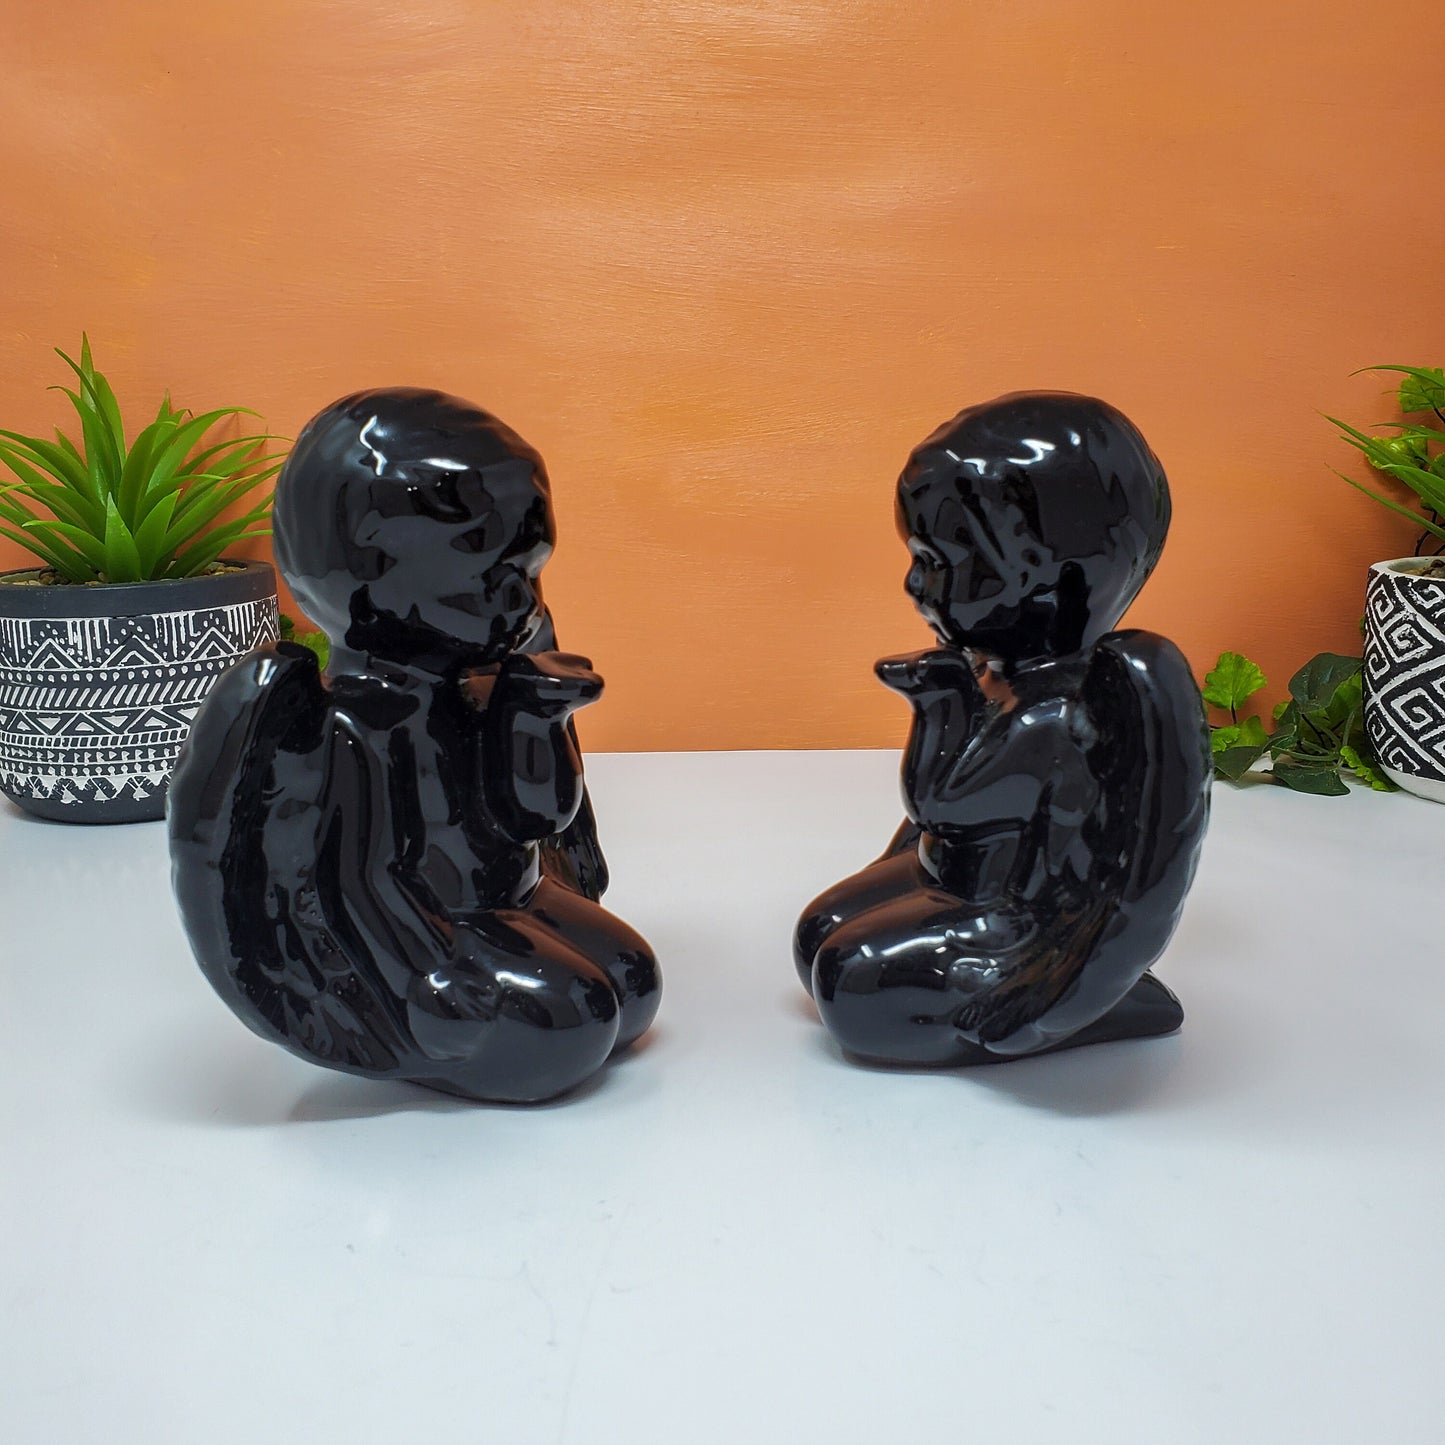 Black Ceramic Cherub Angels Blowing Kisses Statue Figurines | Adorable Angel Cherub Home Decoration - Pair 6" Tall